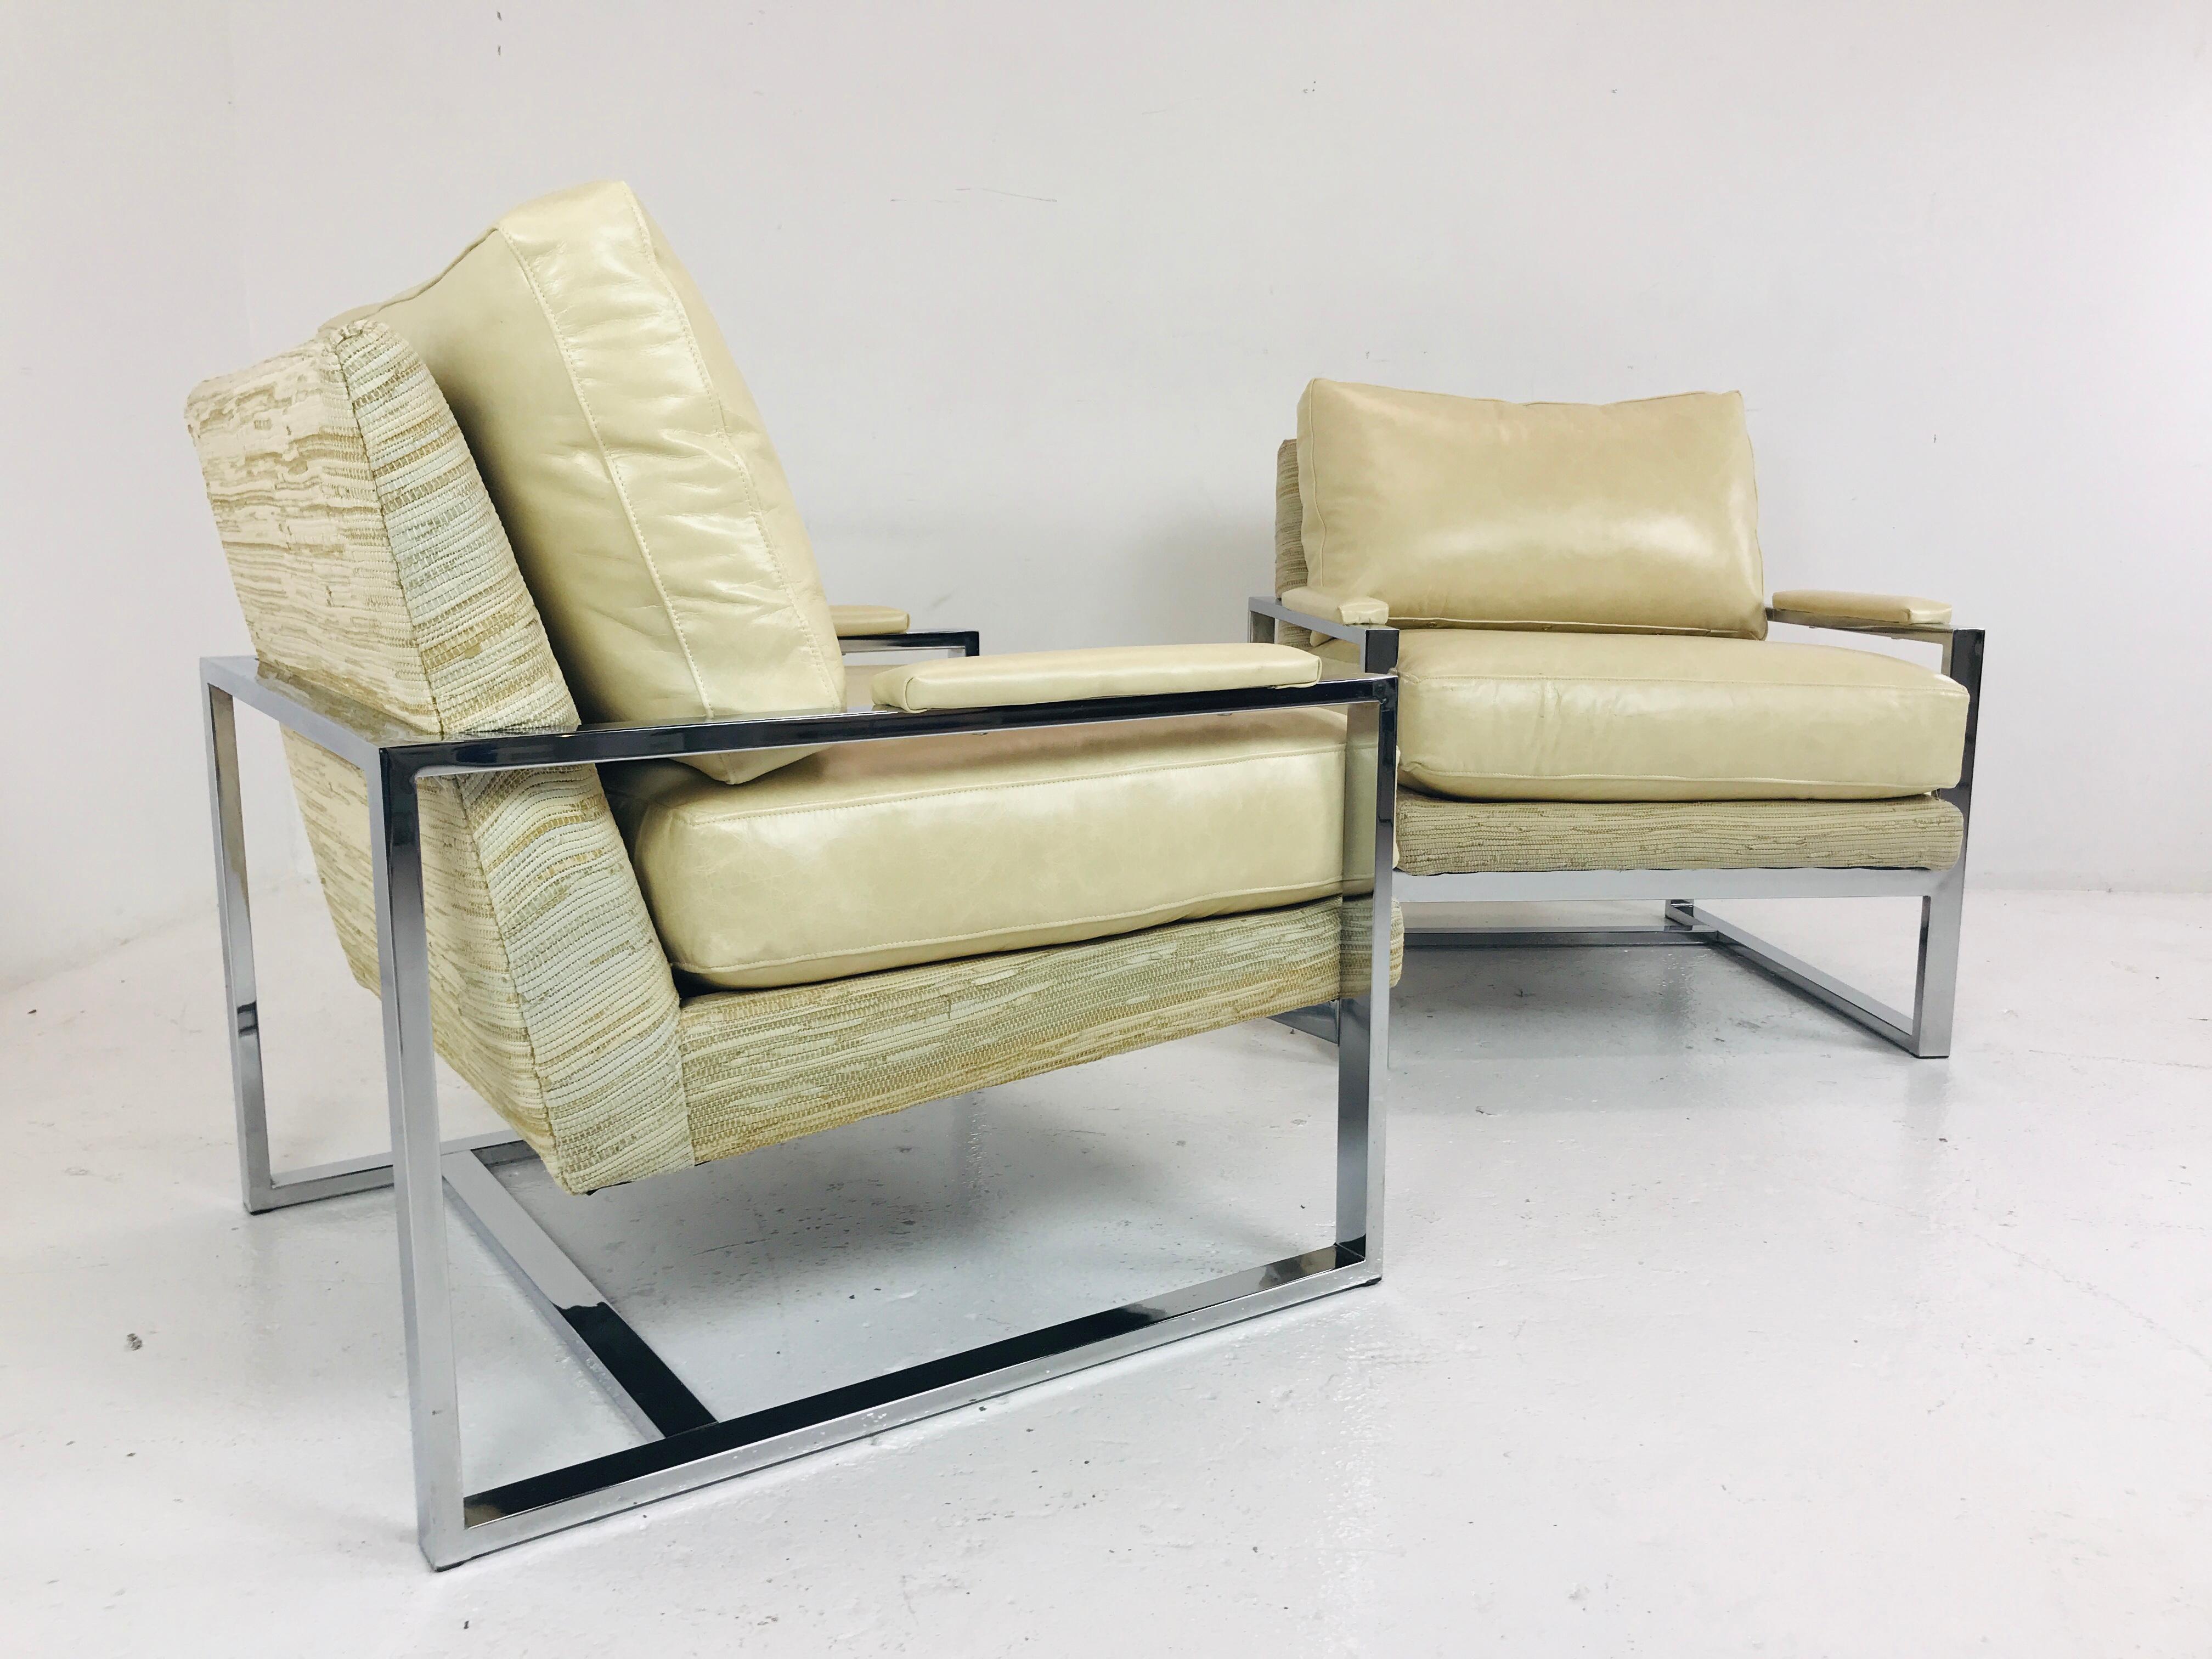 Metalwork Pair of Chrome Milo Baughman Style Chairs